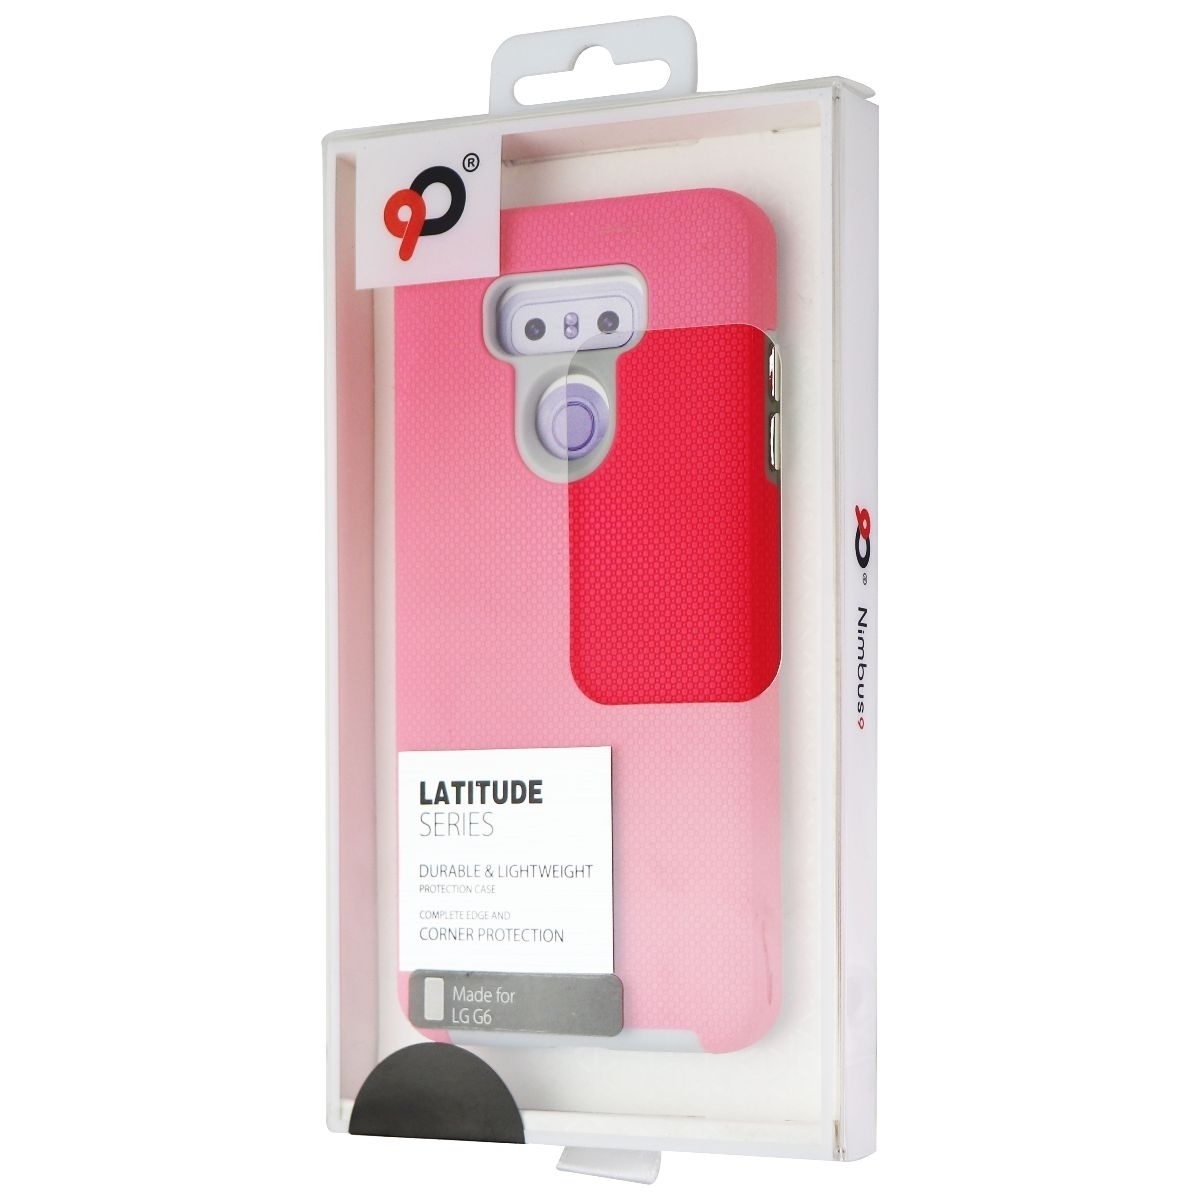 Nimbus9 Latitude Series Dual Layer Case For LG G6 Smartphone - Pink/Gray (Refurbished)